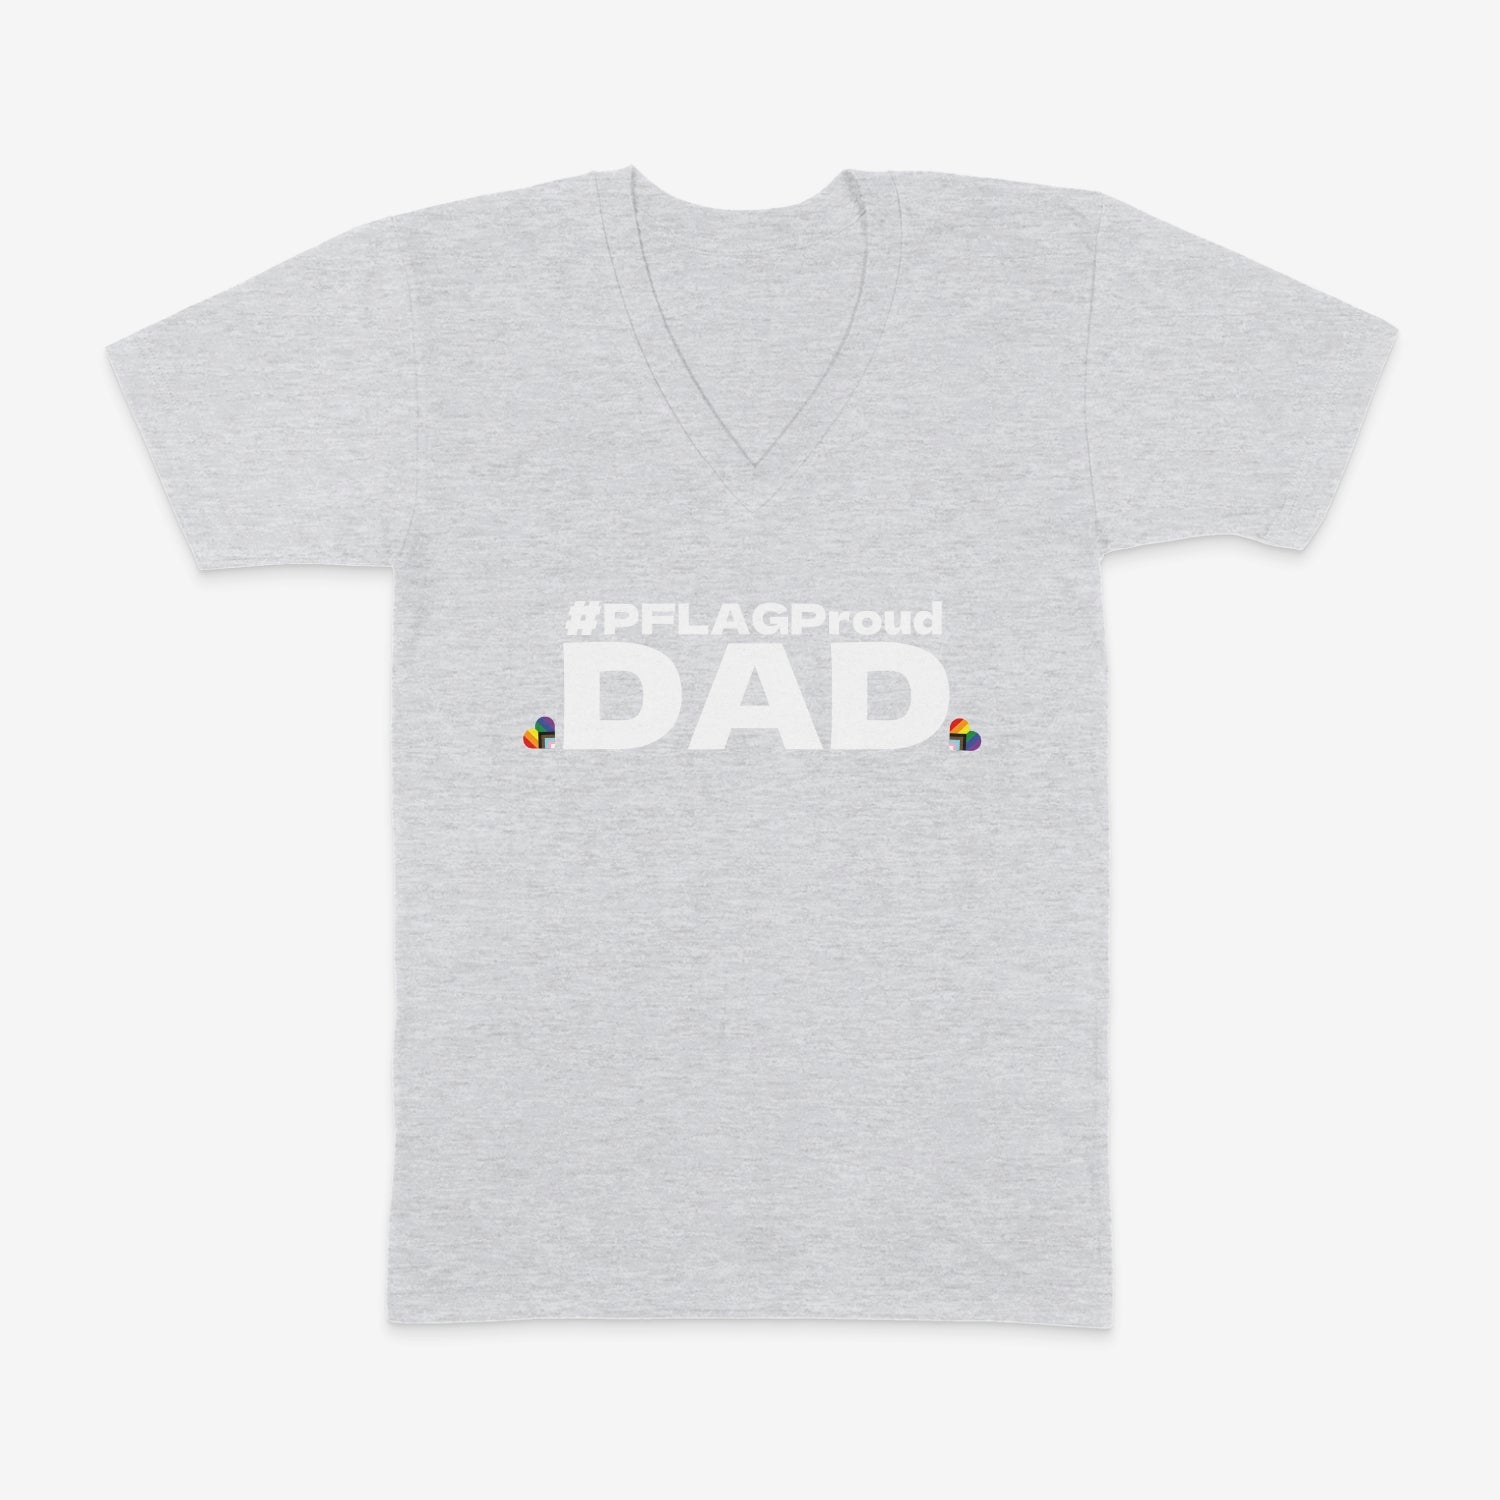 #PFLAGProud Dad - Wide-Cut V-Neck Short Sleeve T-Shirt